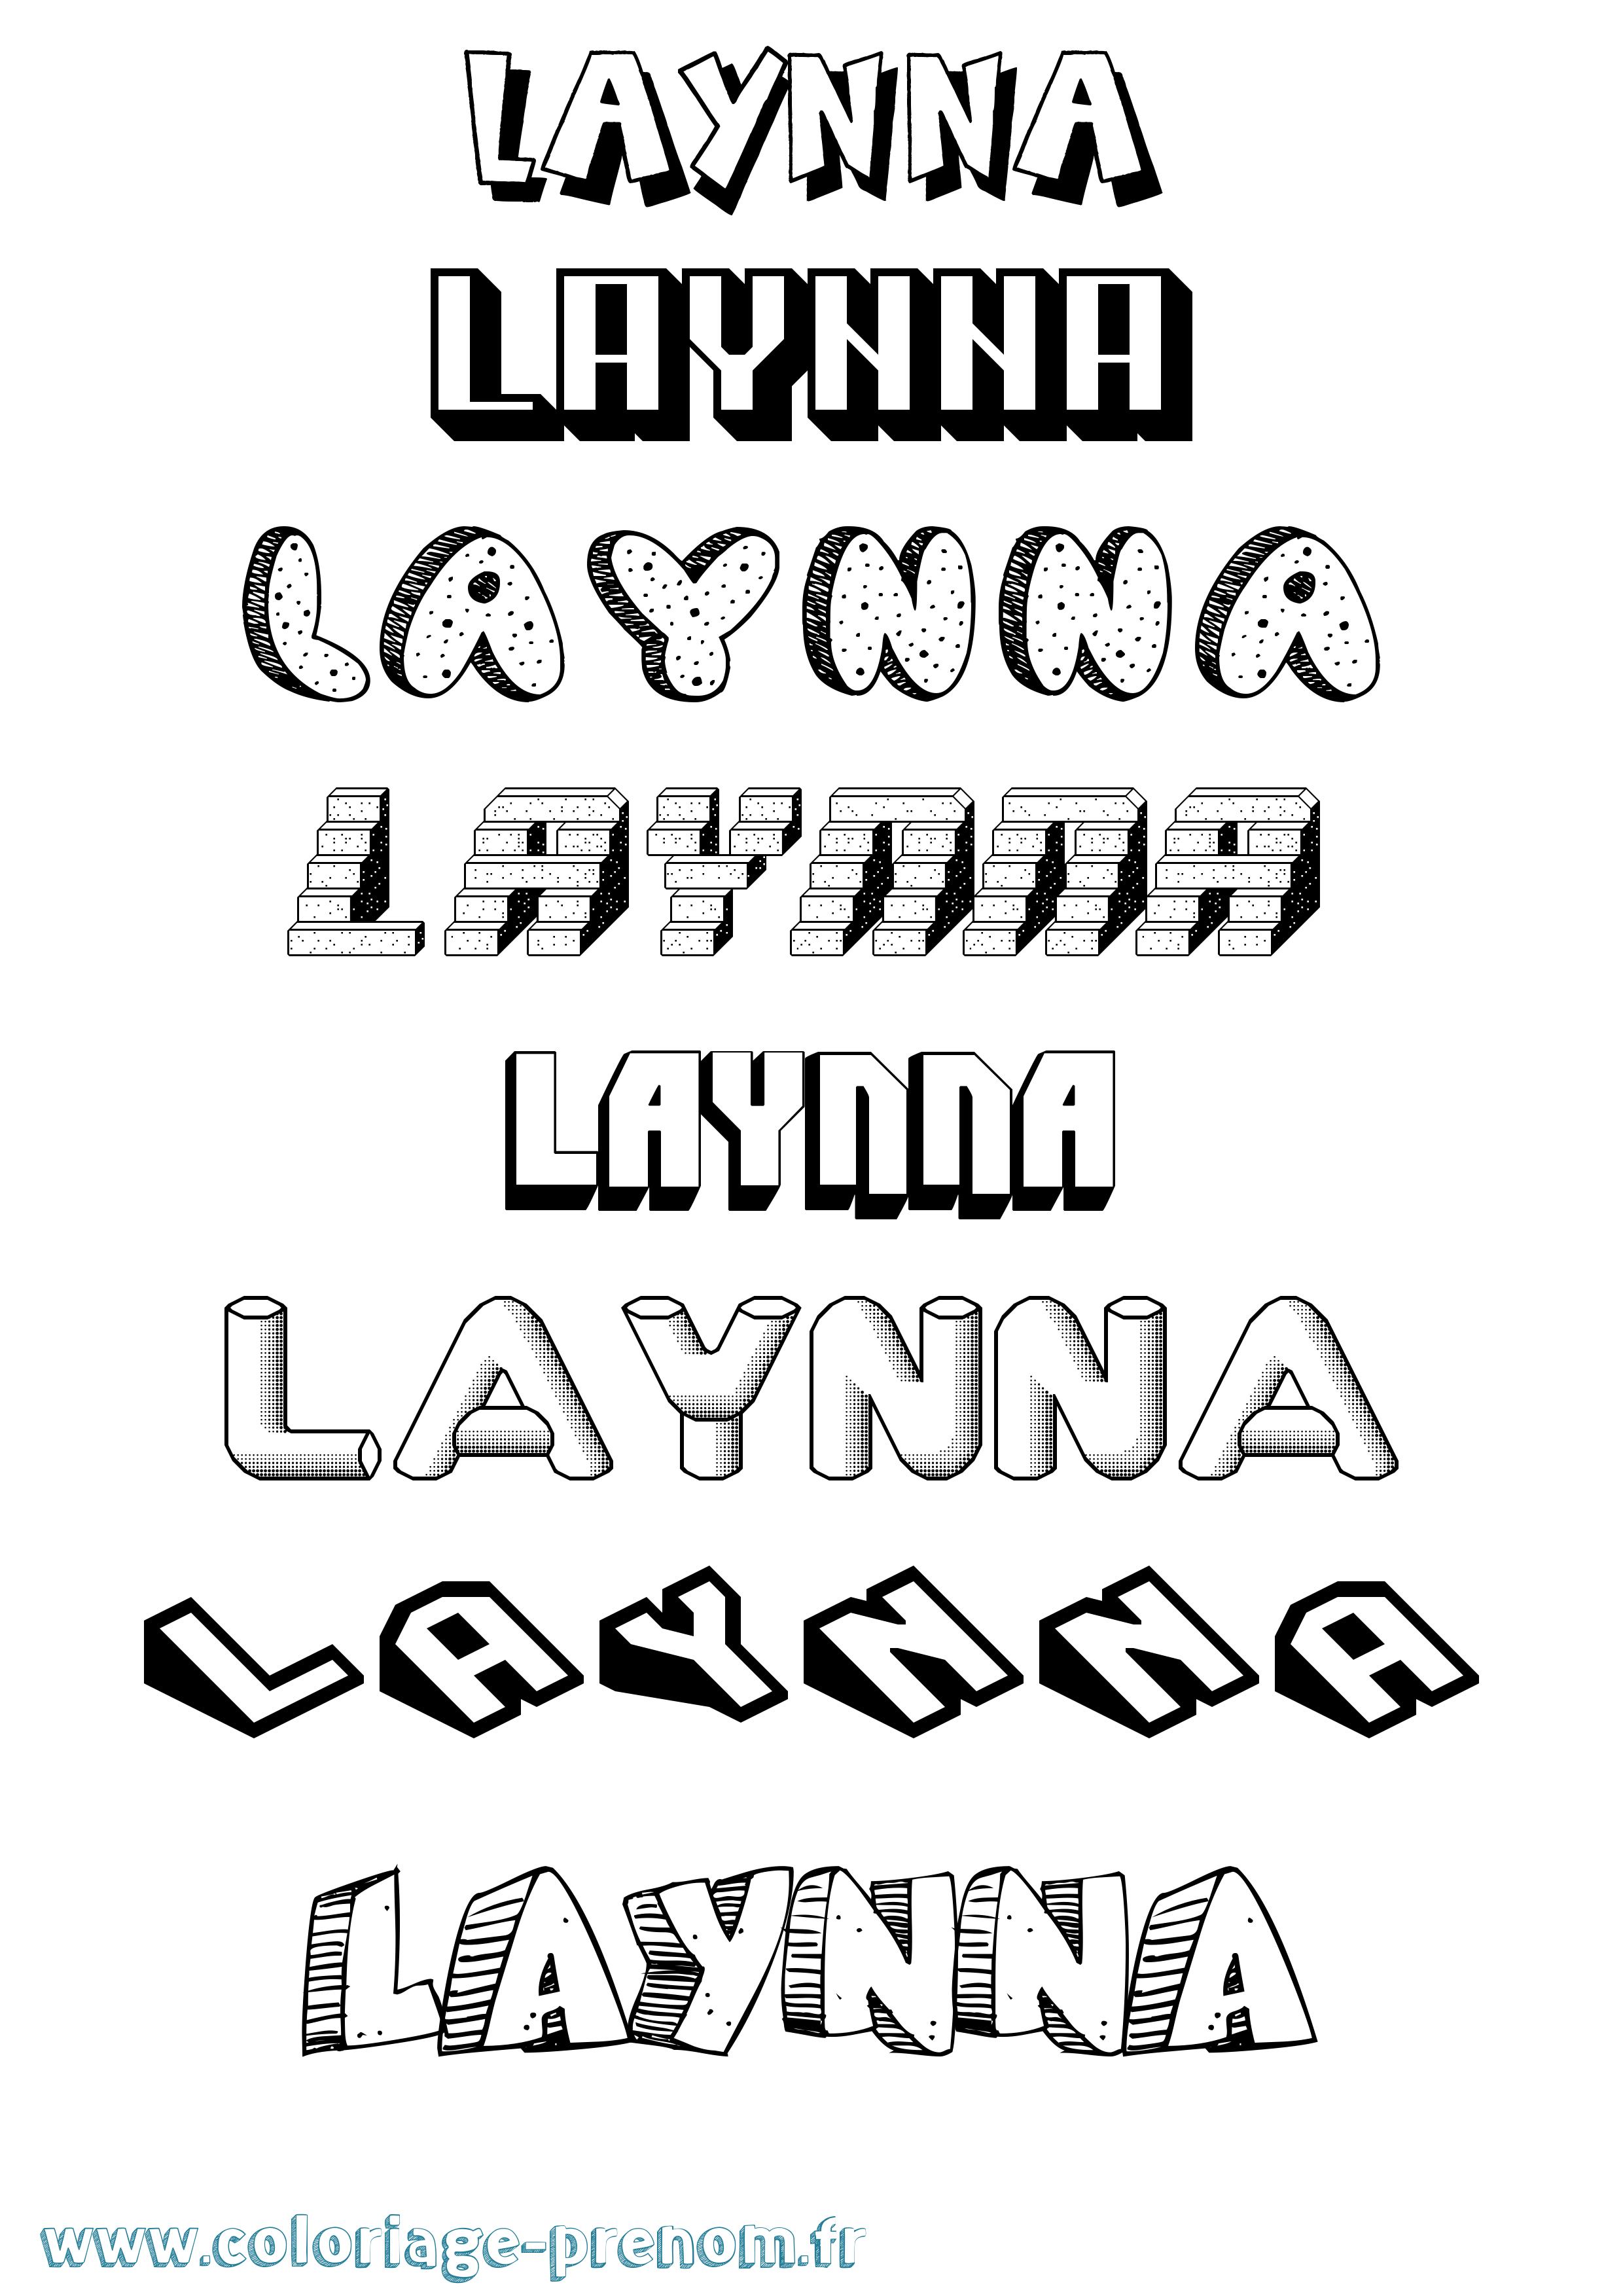 Coloriage prénom Laynna Effet 3D